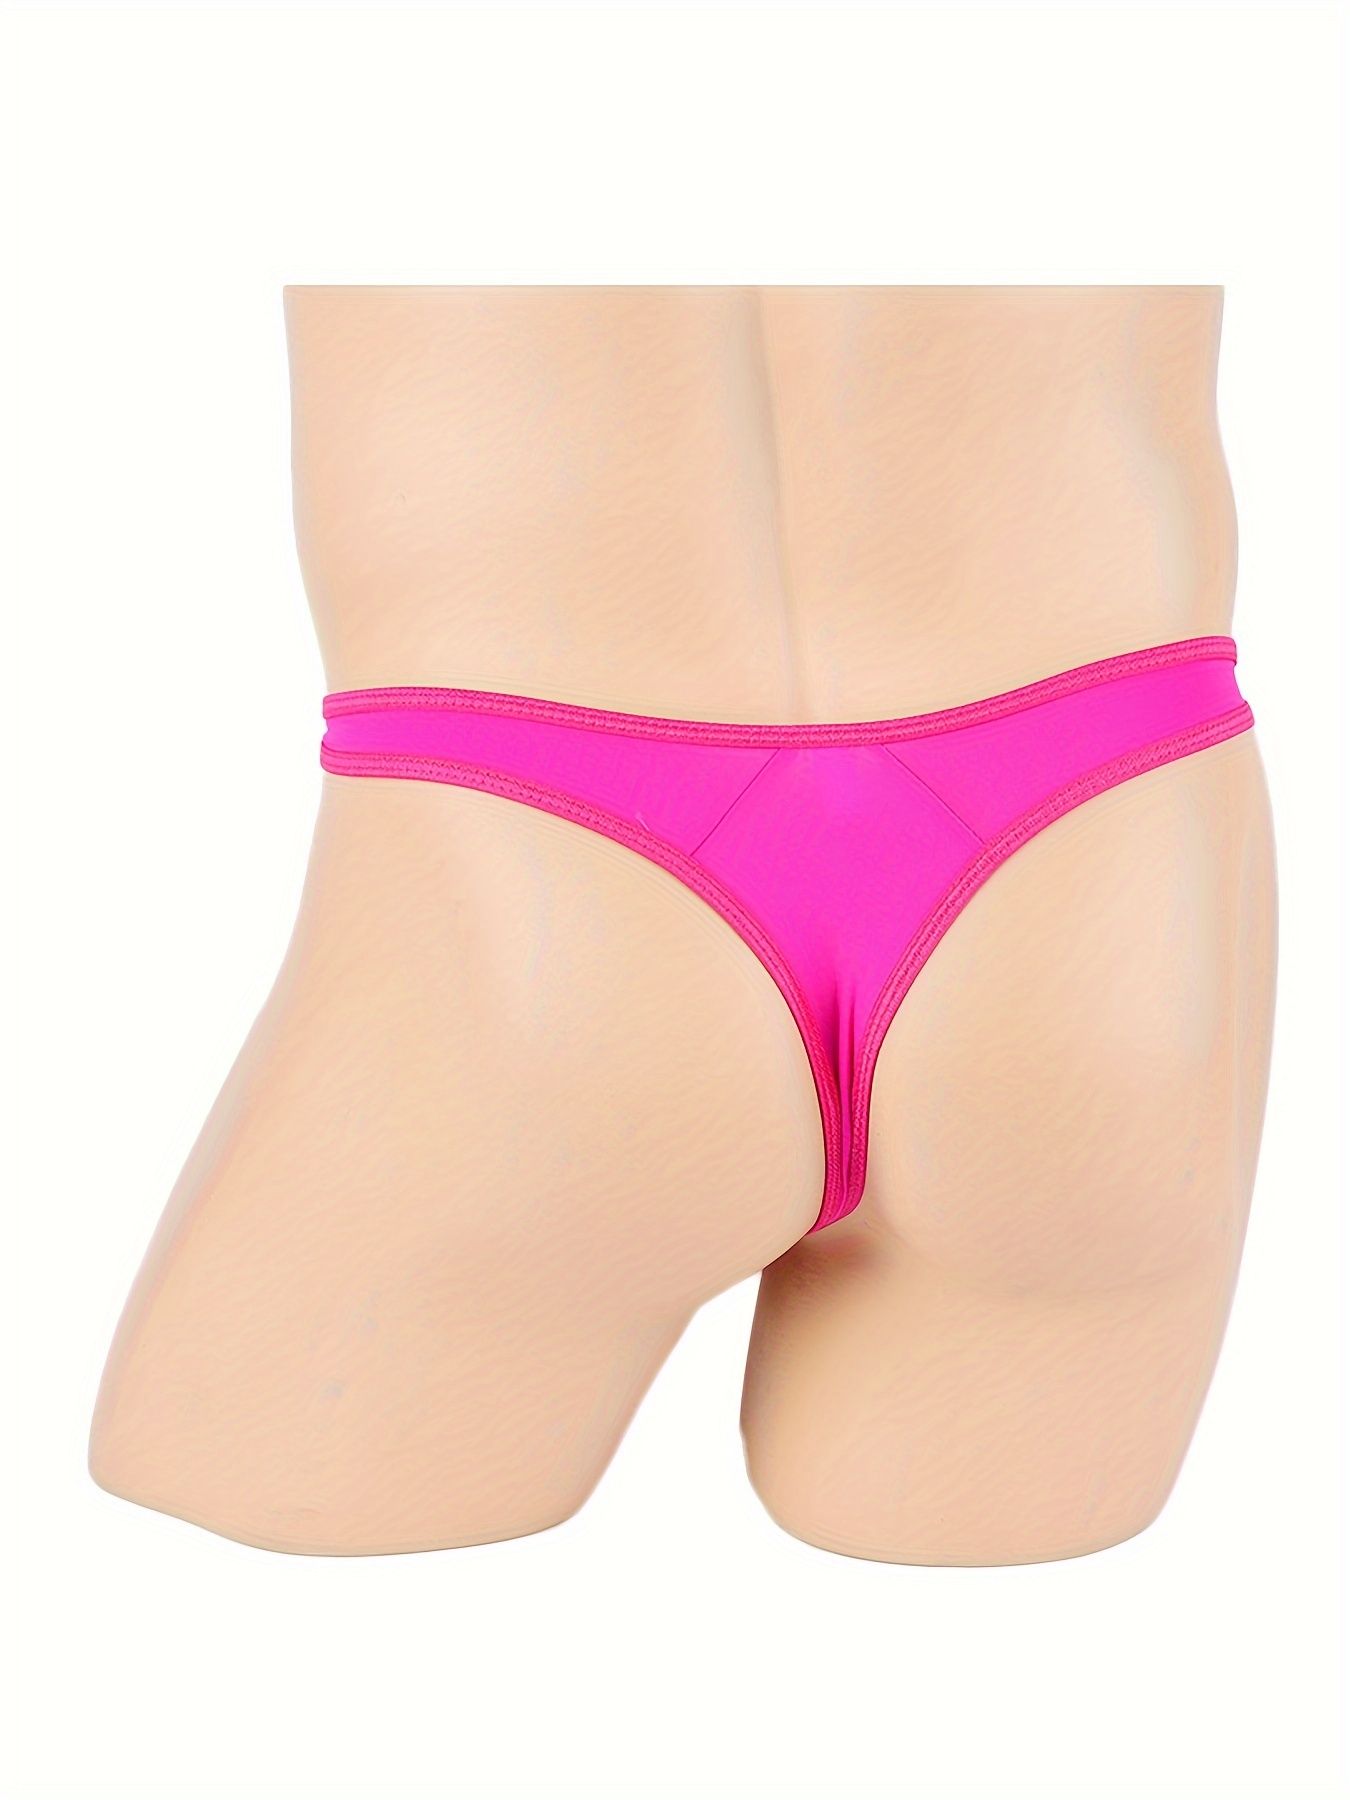 Transparent Panties Underwear Silk Briefs T back Sexy G-string Lingerie  Thongs 